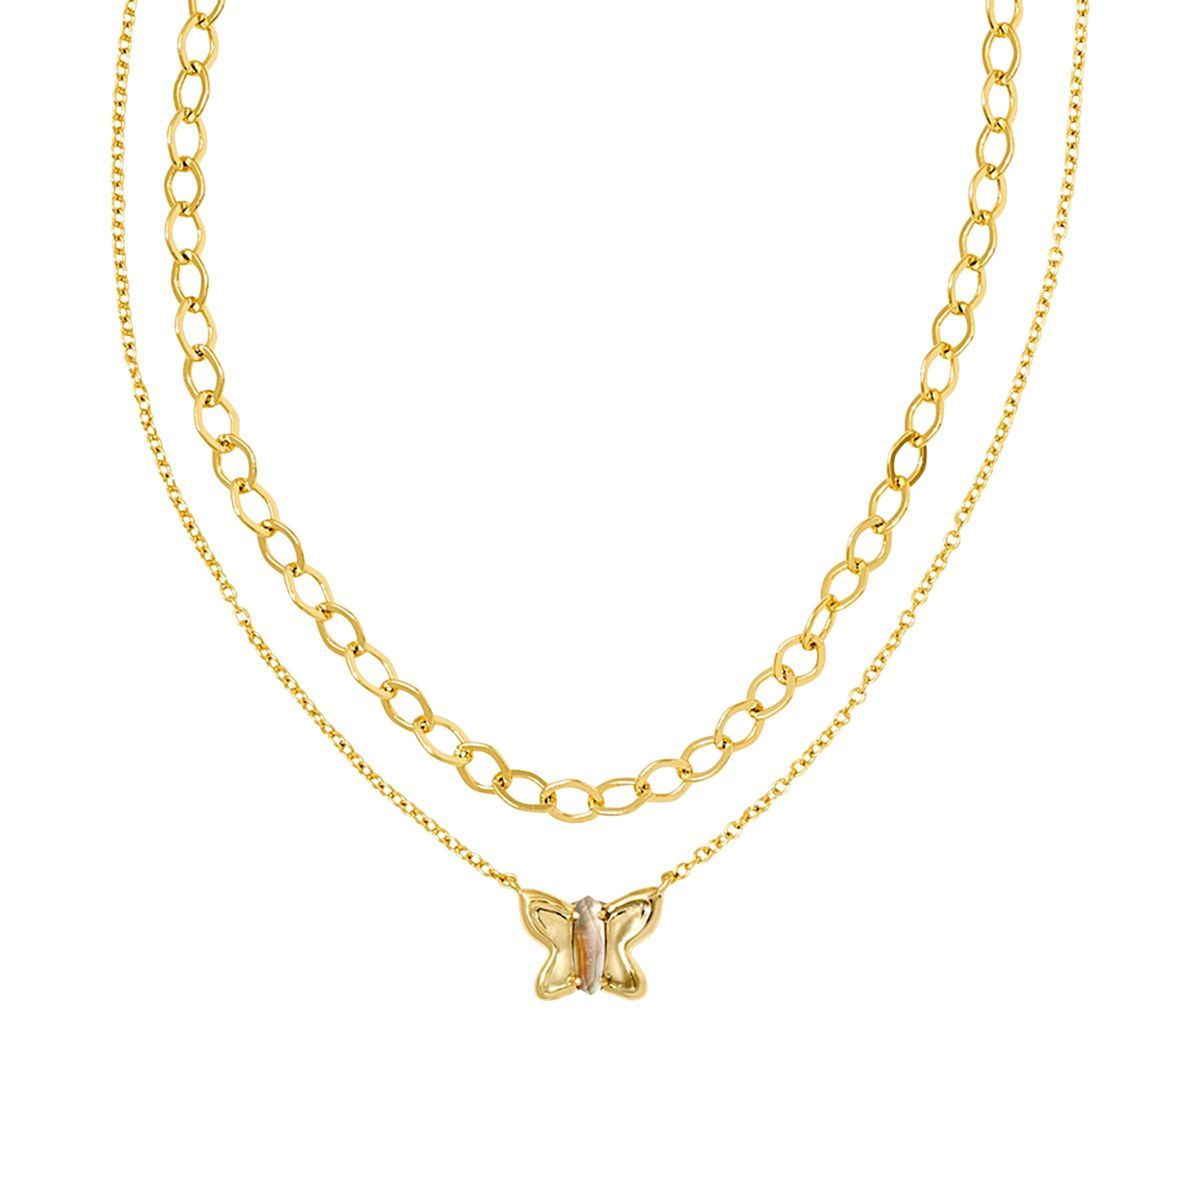 Kendra Scott SADIE 14K Gold Over Brass Multi-Strand Necklace - Iridescent | Target